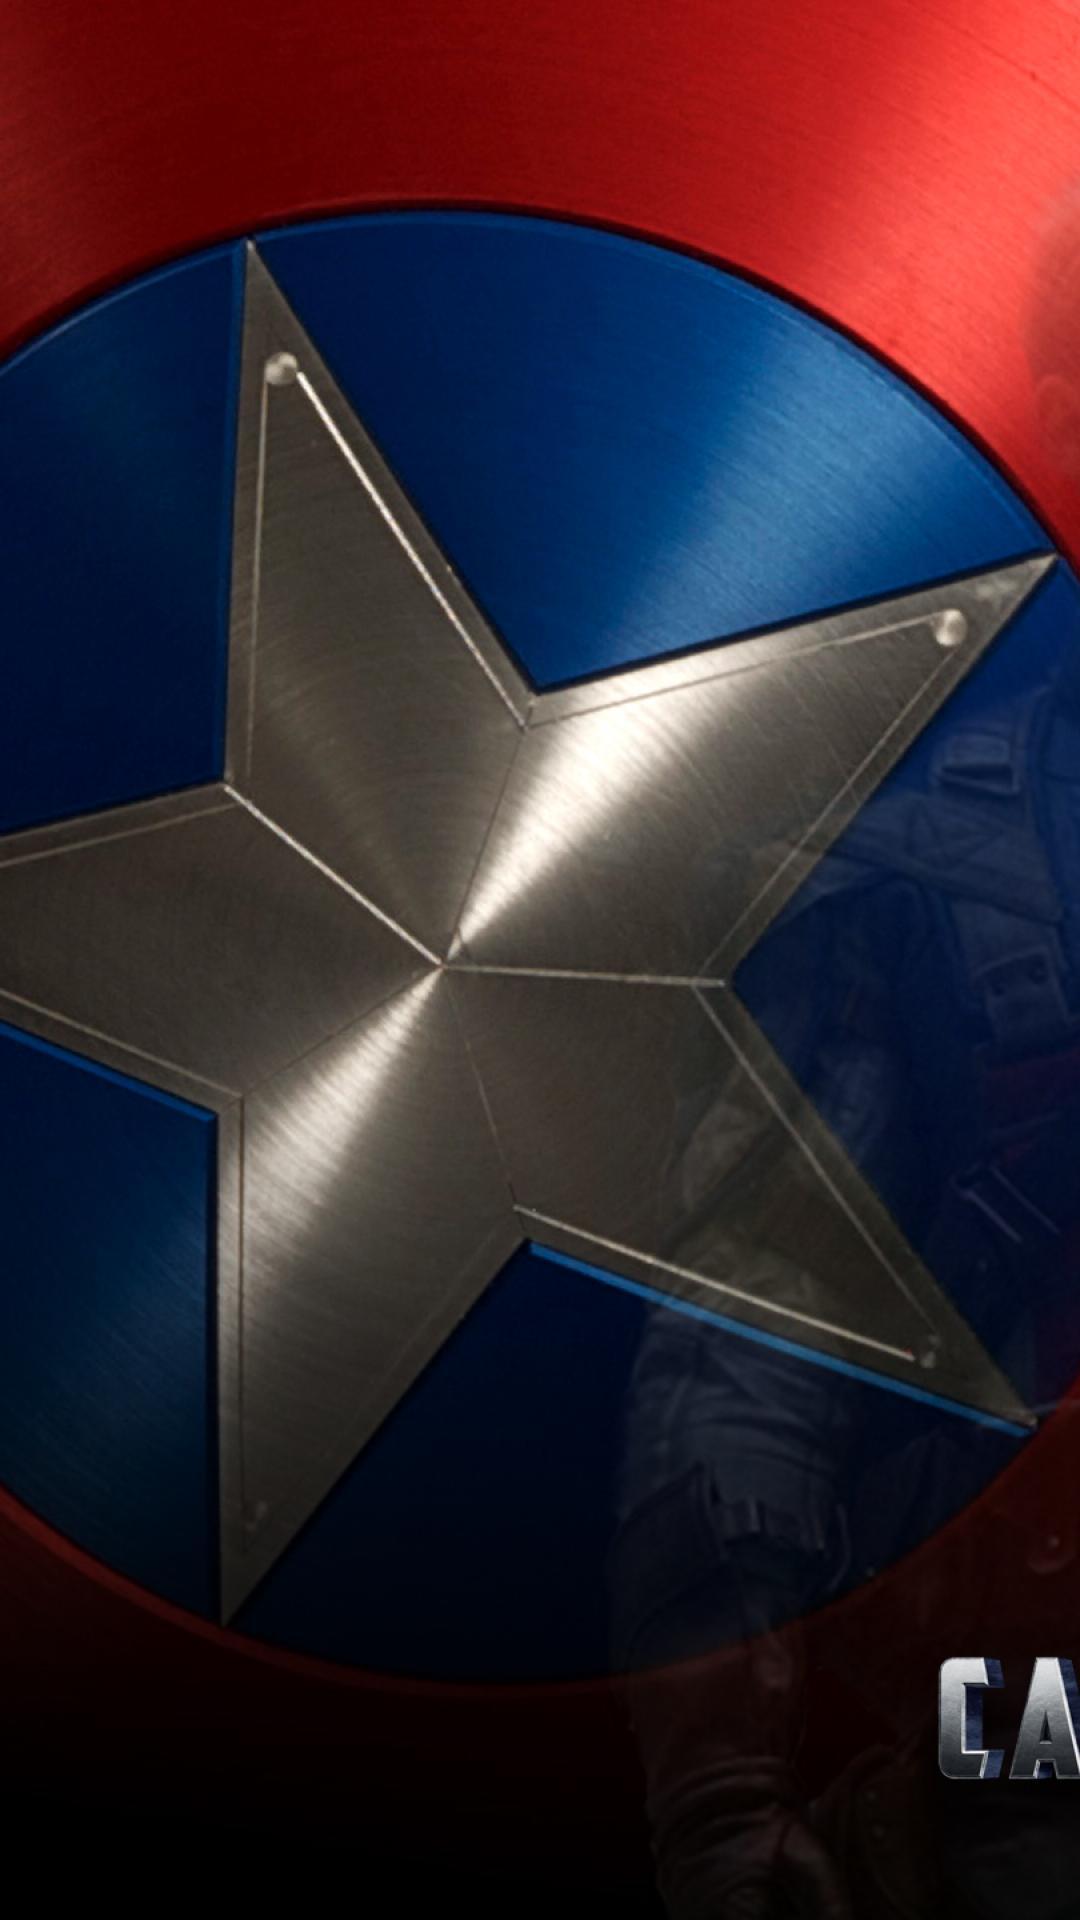 11 Mb, Captain America Shield iPhone Wallpaper